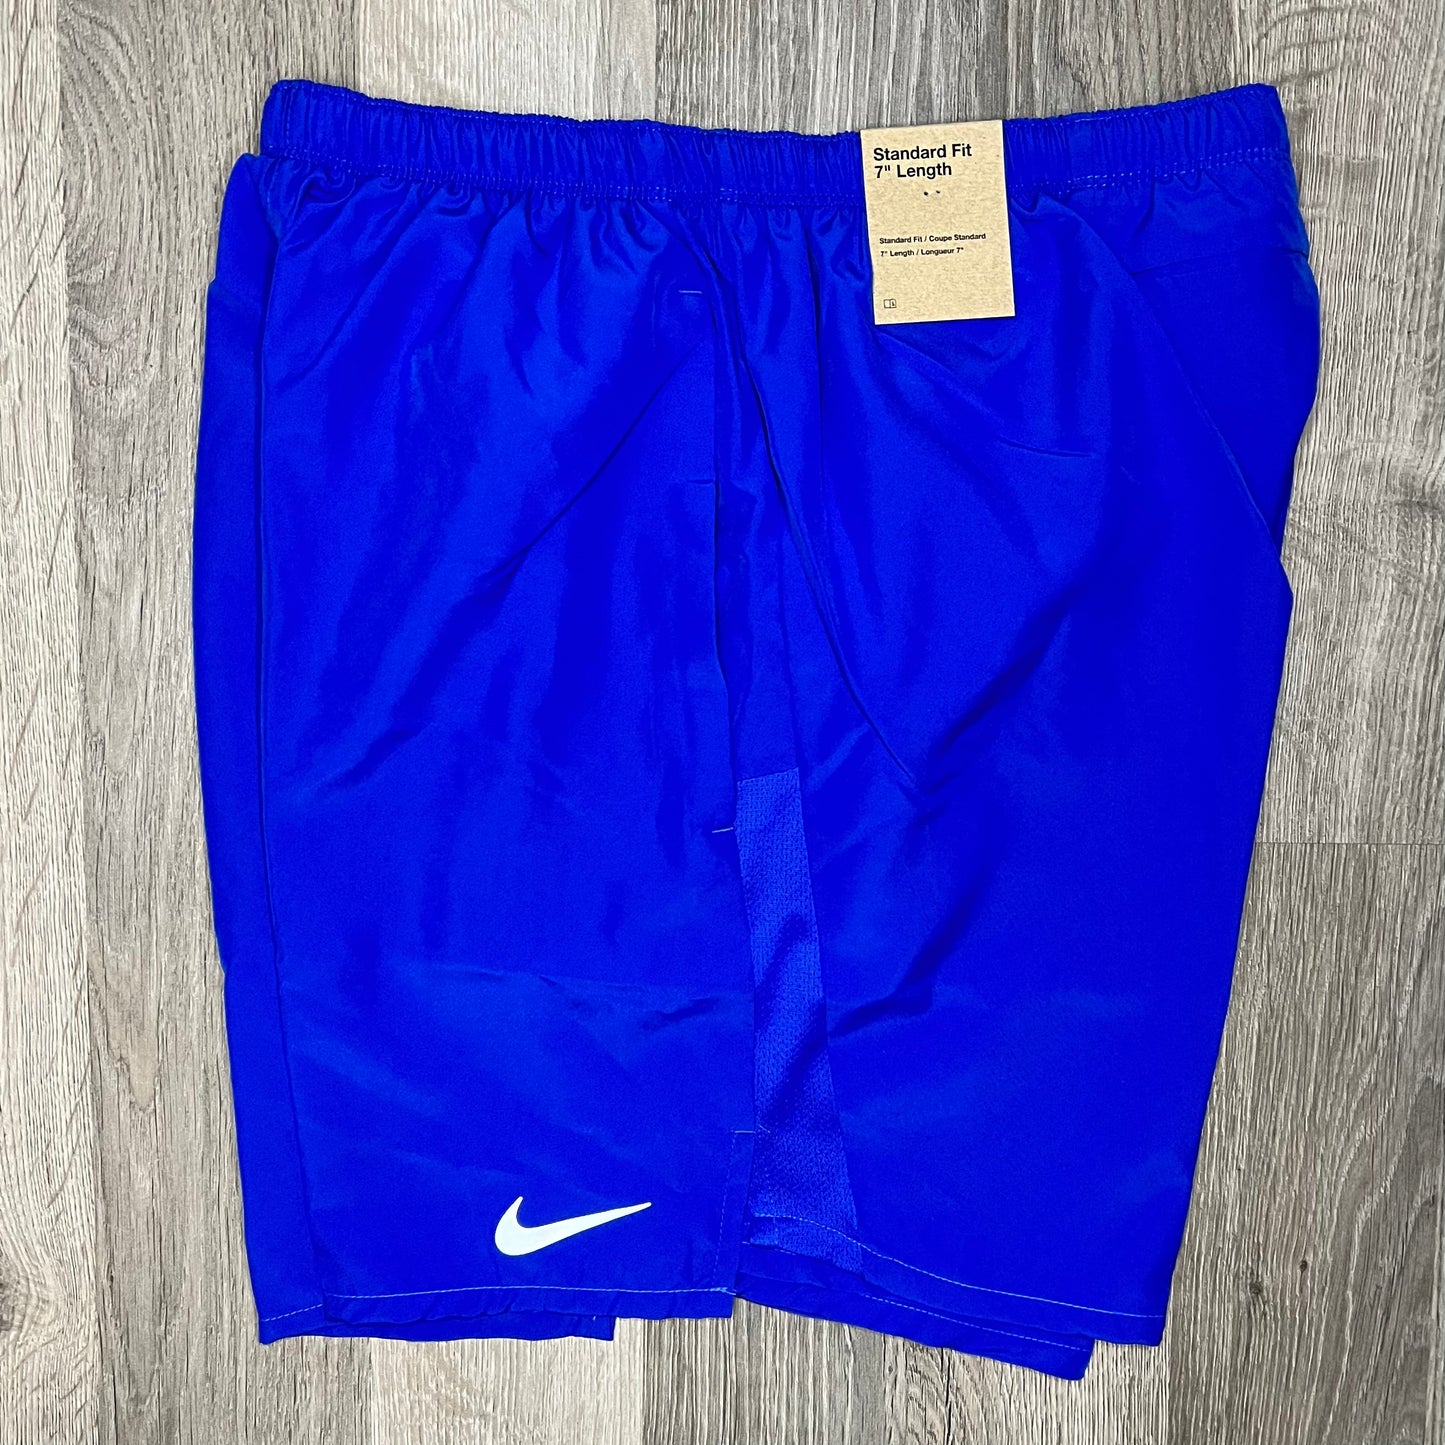 Nike Challenger Shorts Royal Blue